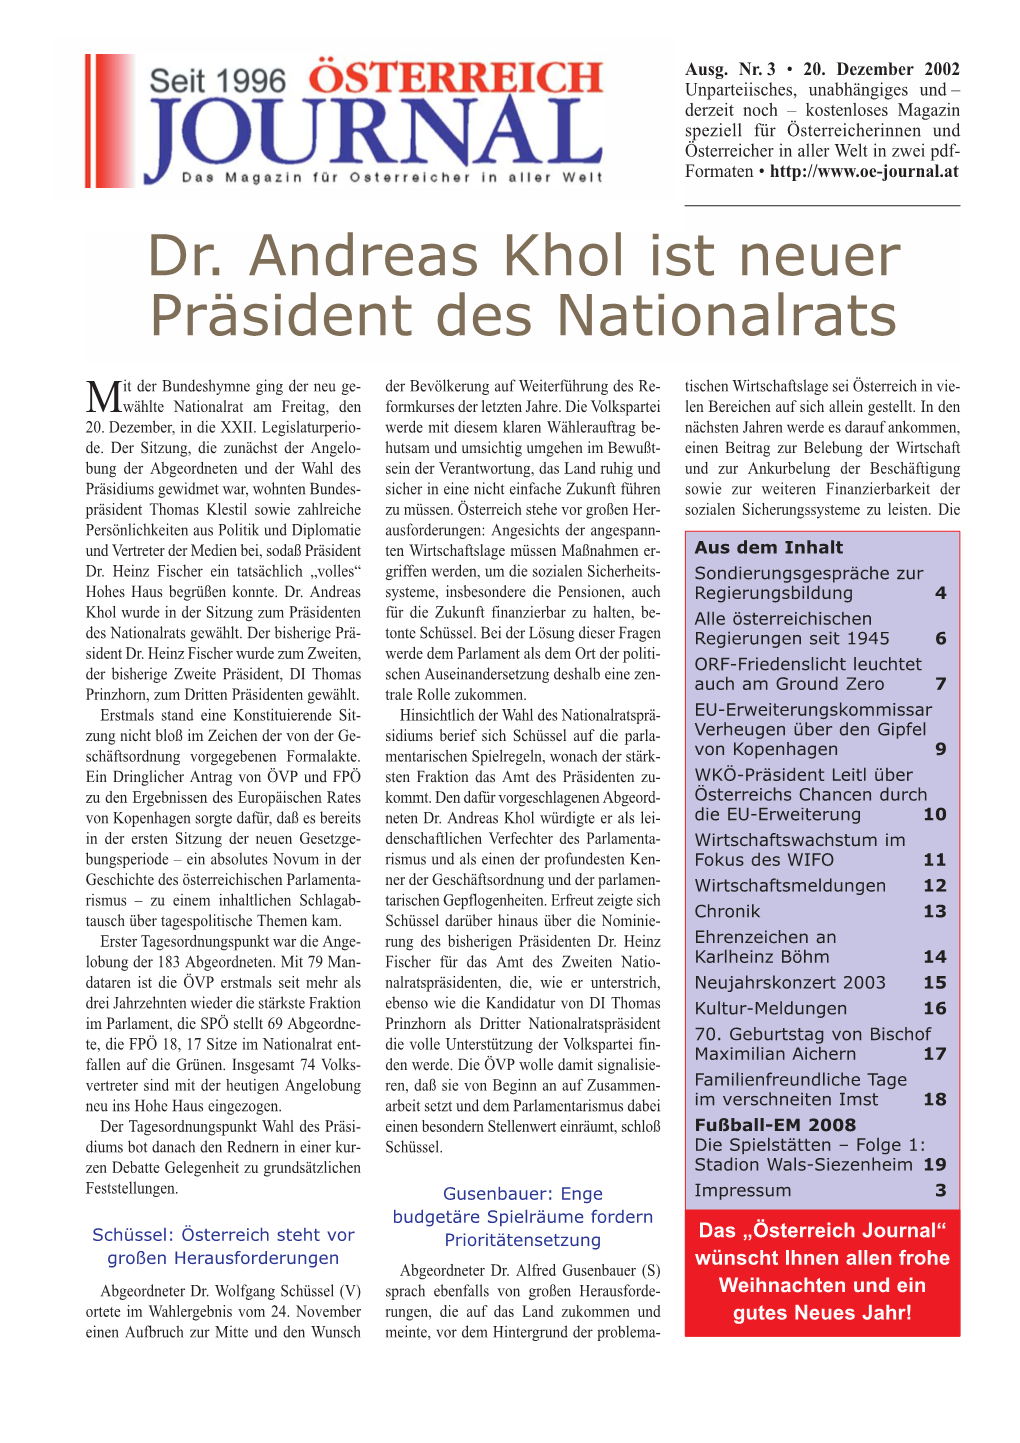 Dr. Andreas Khol Ist Neuer Präsident Des Nationalrats